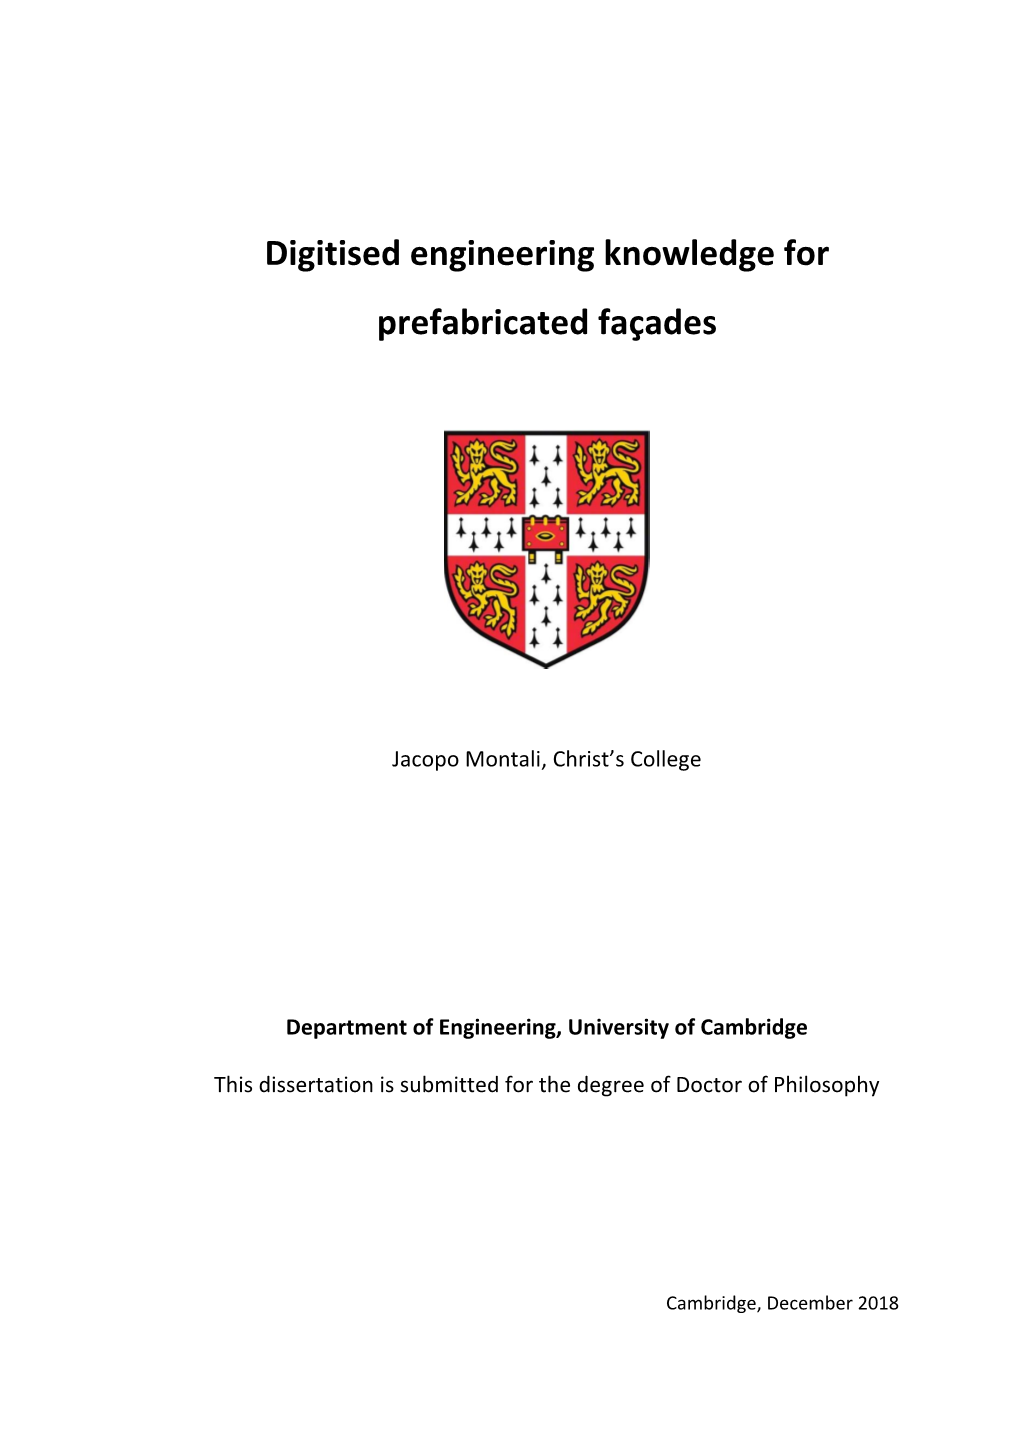 Digitised Engineering Knowledge for Prefabricated Façades